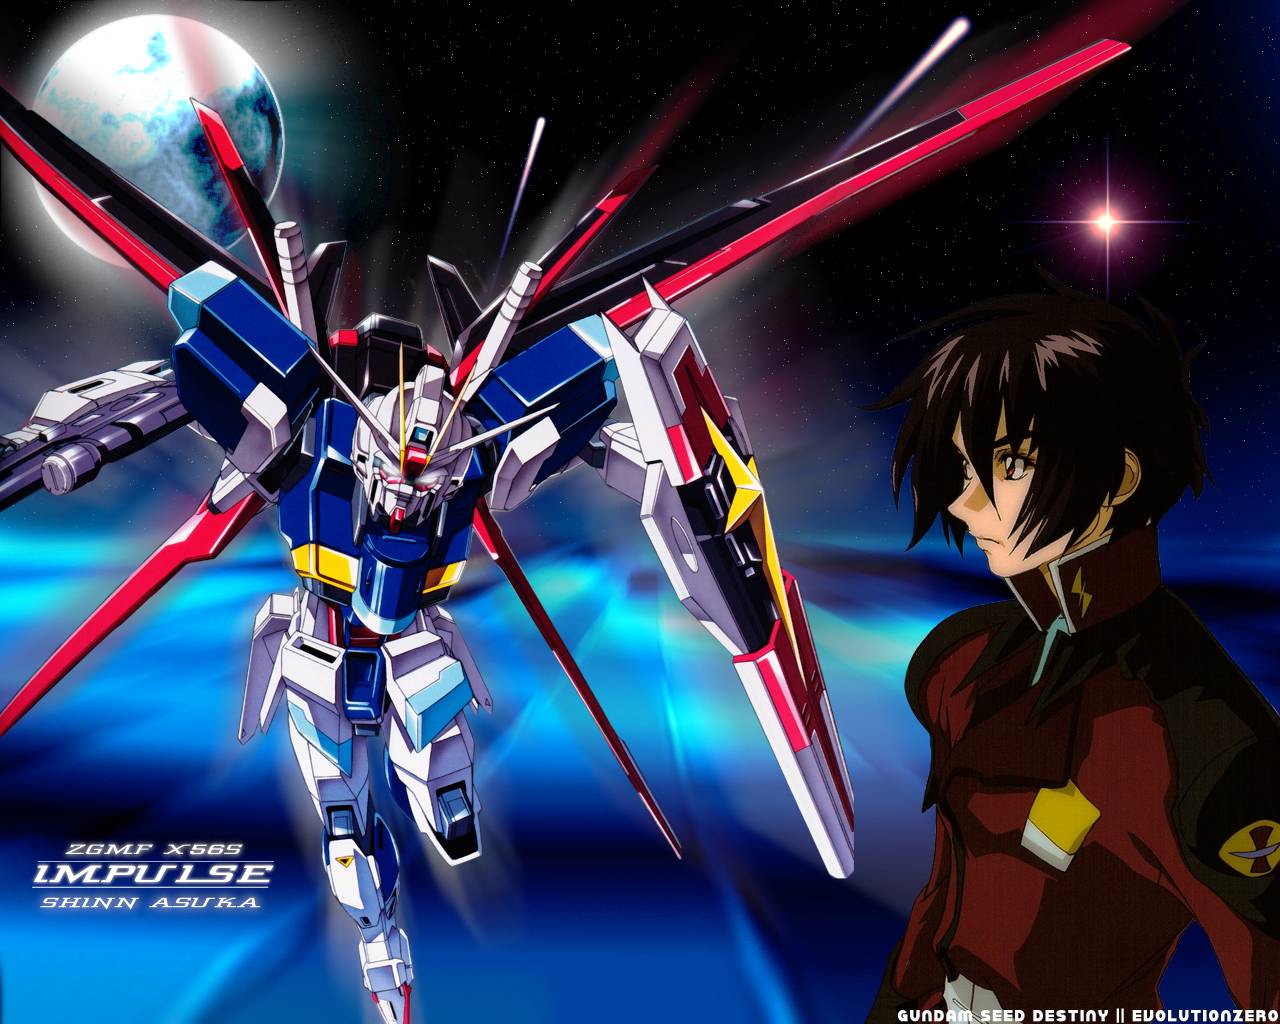 High Resolution Wallpaper | Mobile Suit Gundam 1280x1024 px